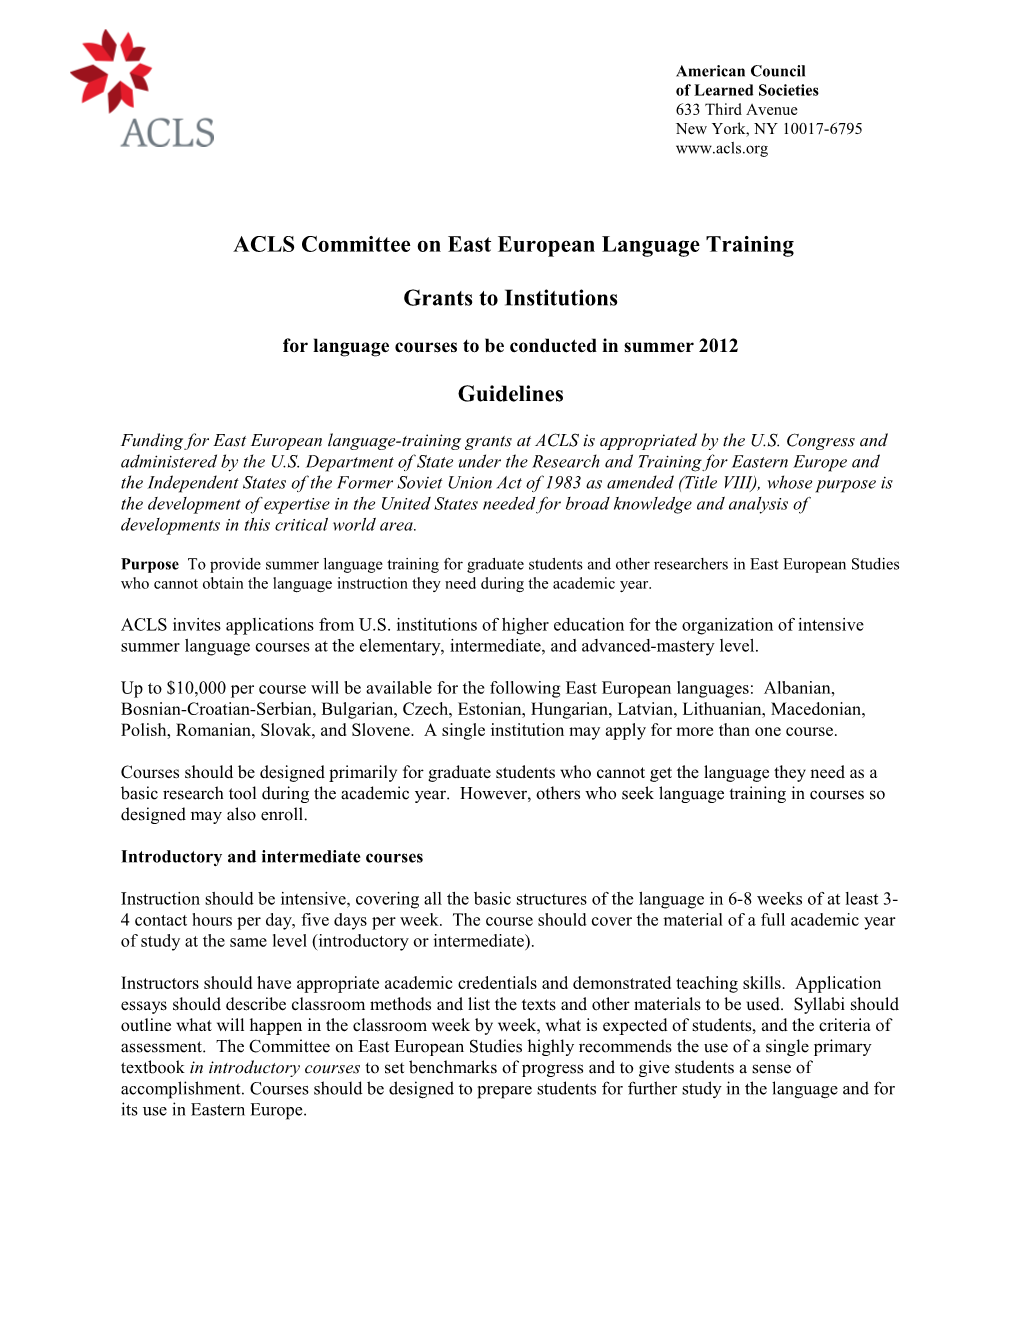 ACLS Committee on East European Language Training